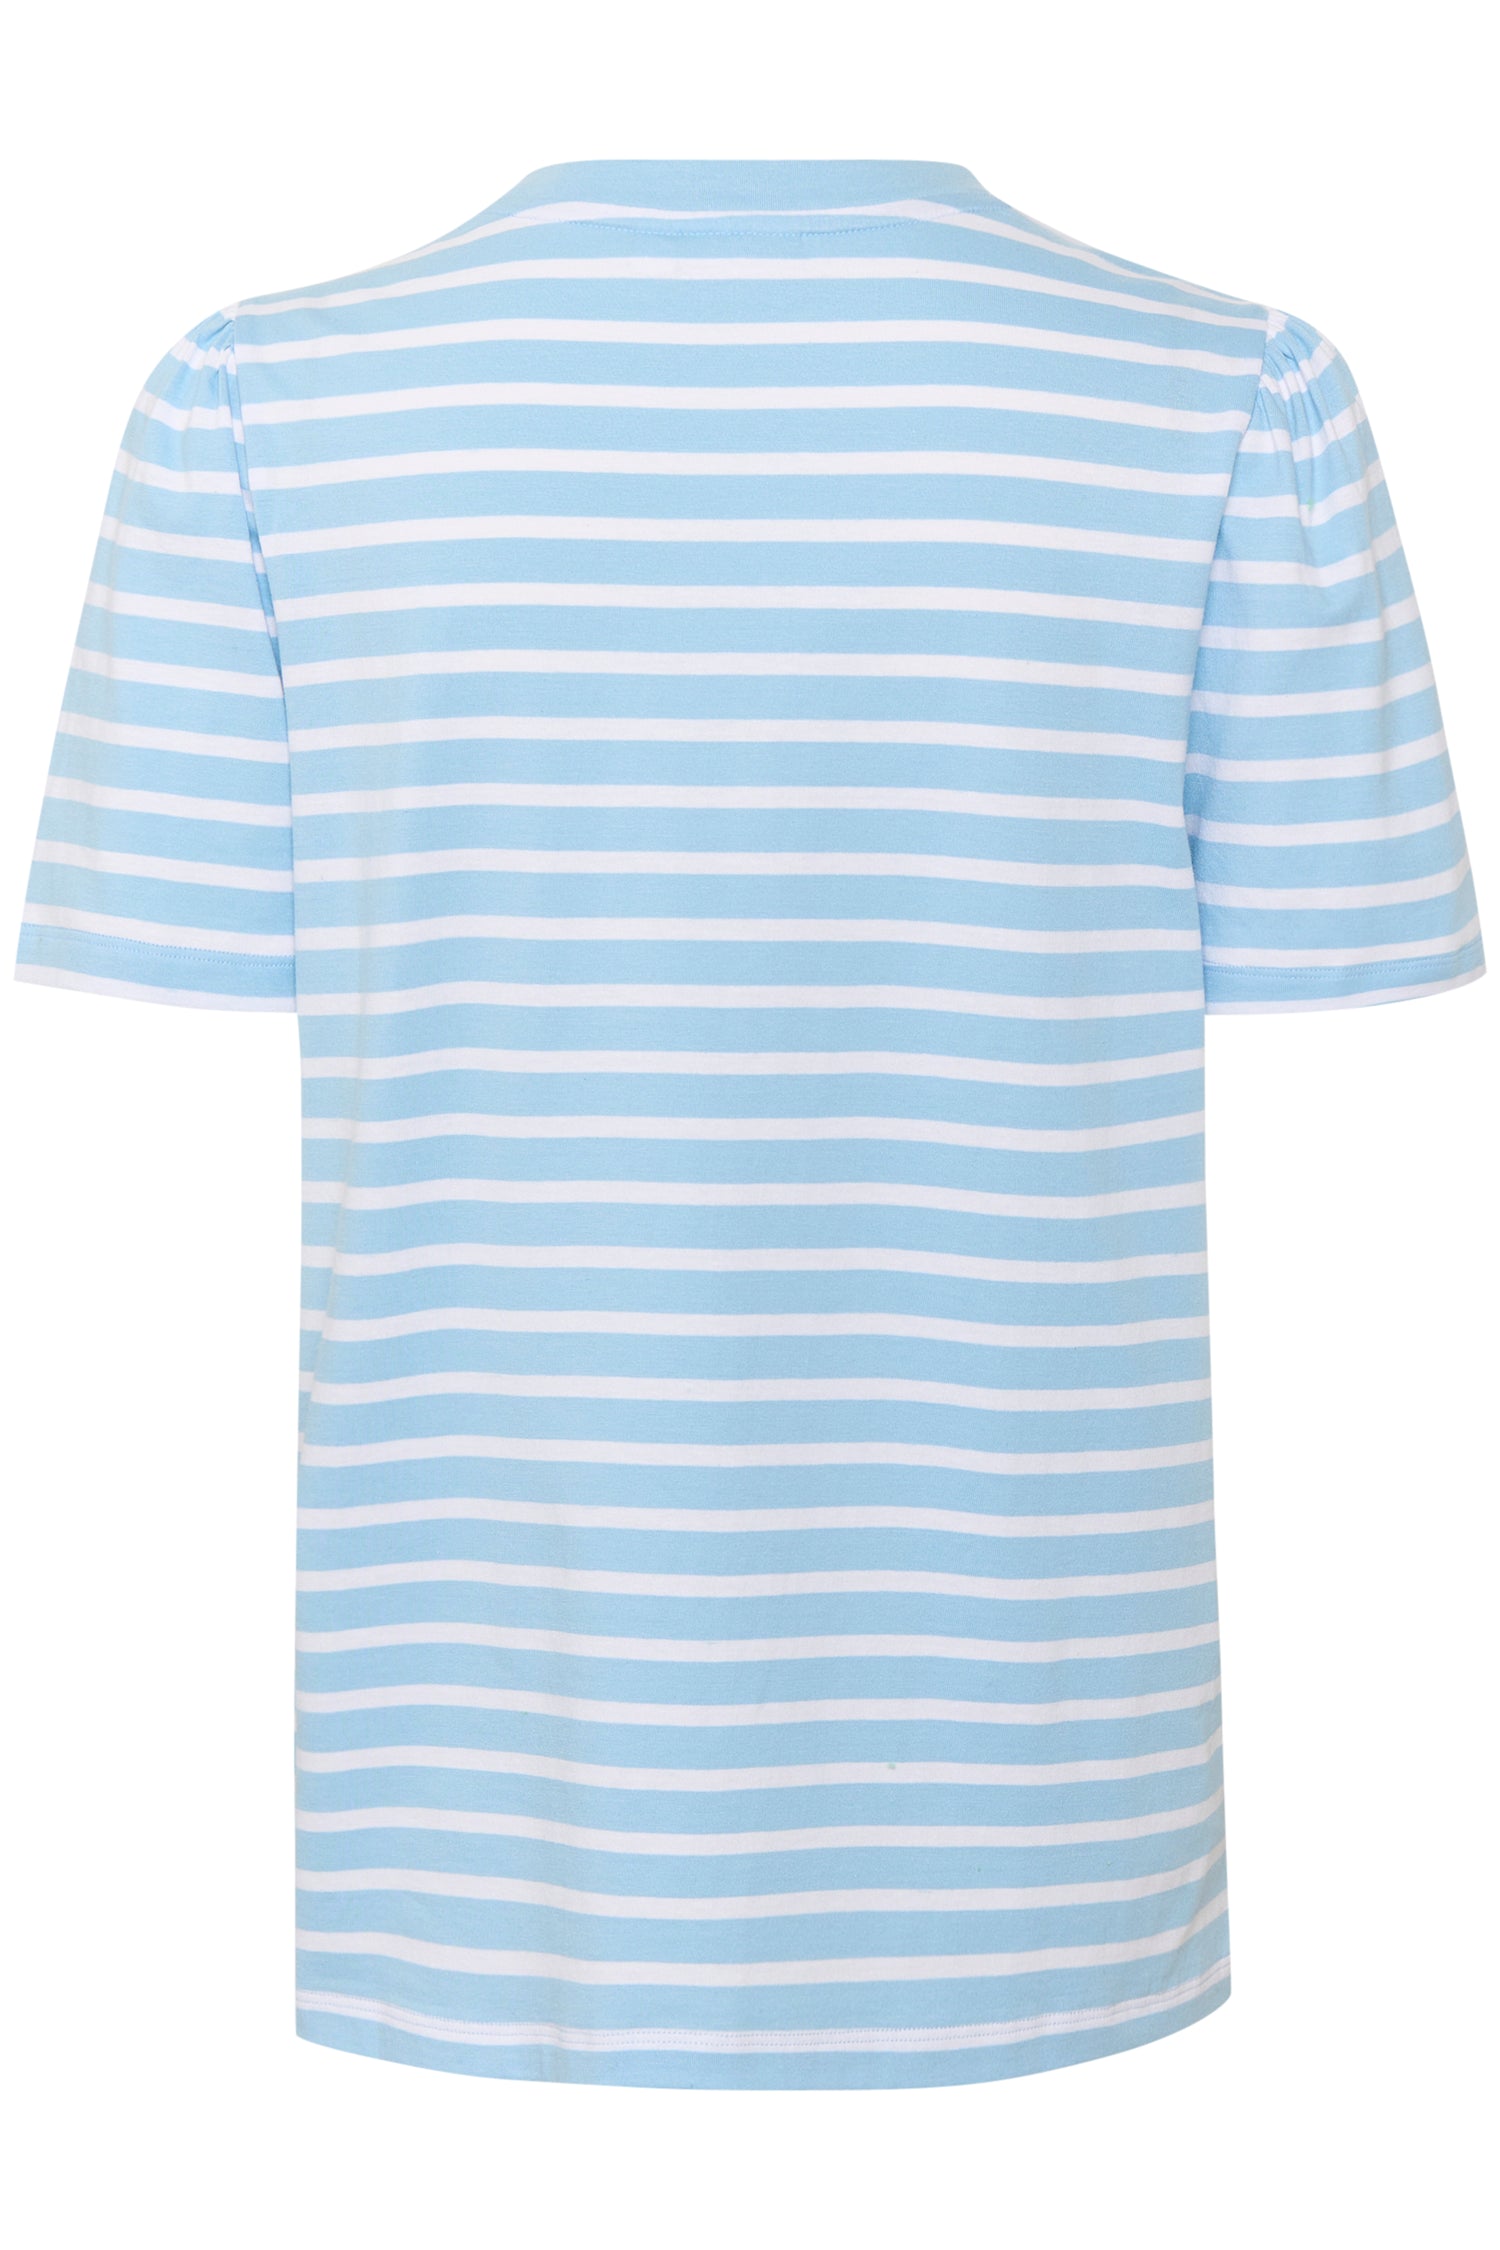 Saint Tropez Vilja Striped T-Shirt with Heart Motif in Dutch Canal Blue